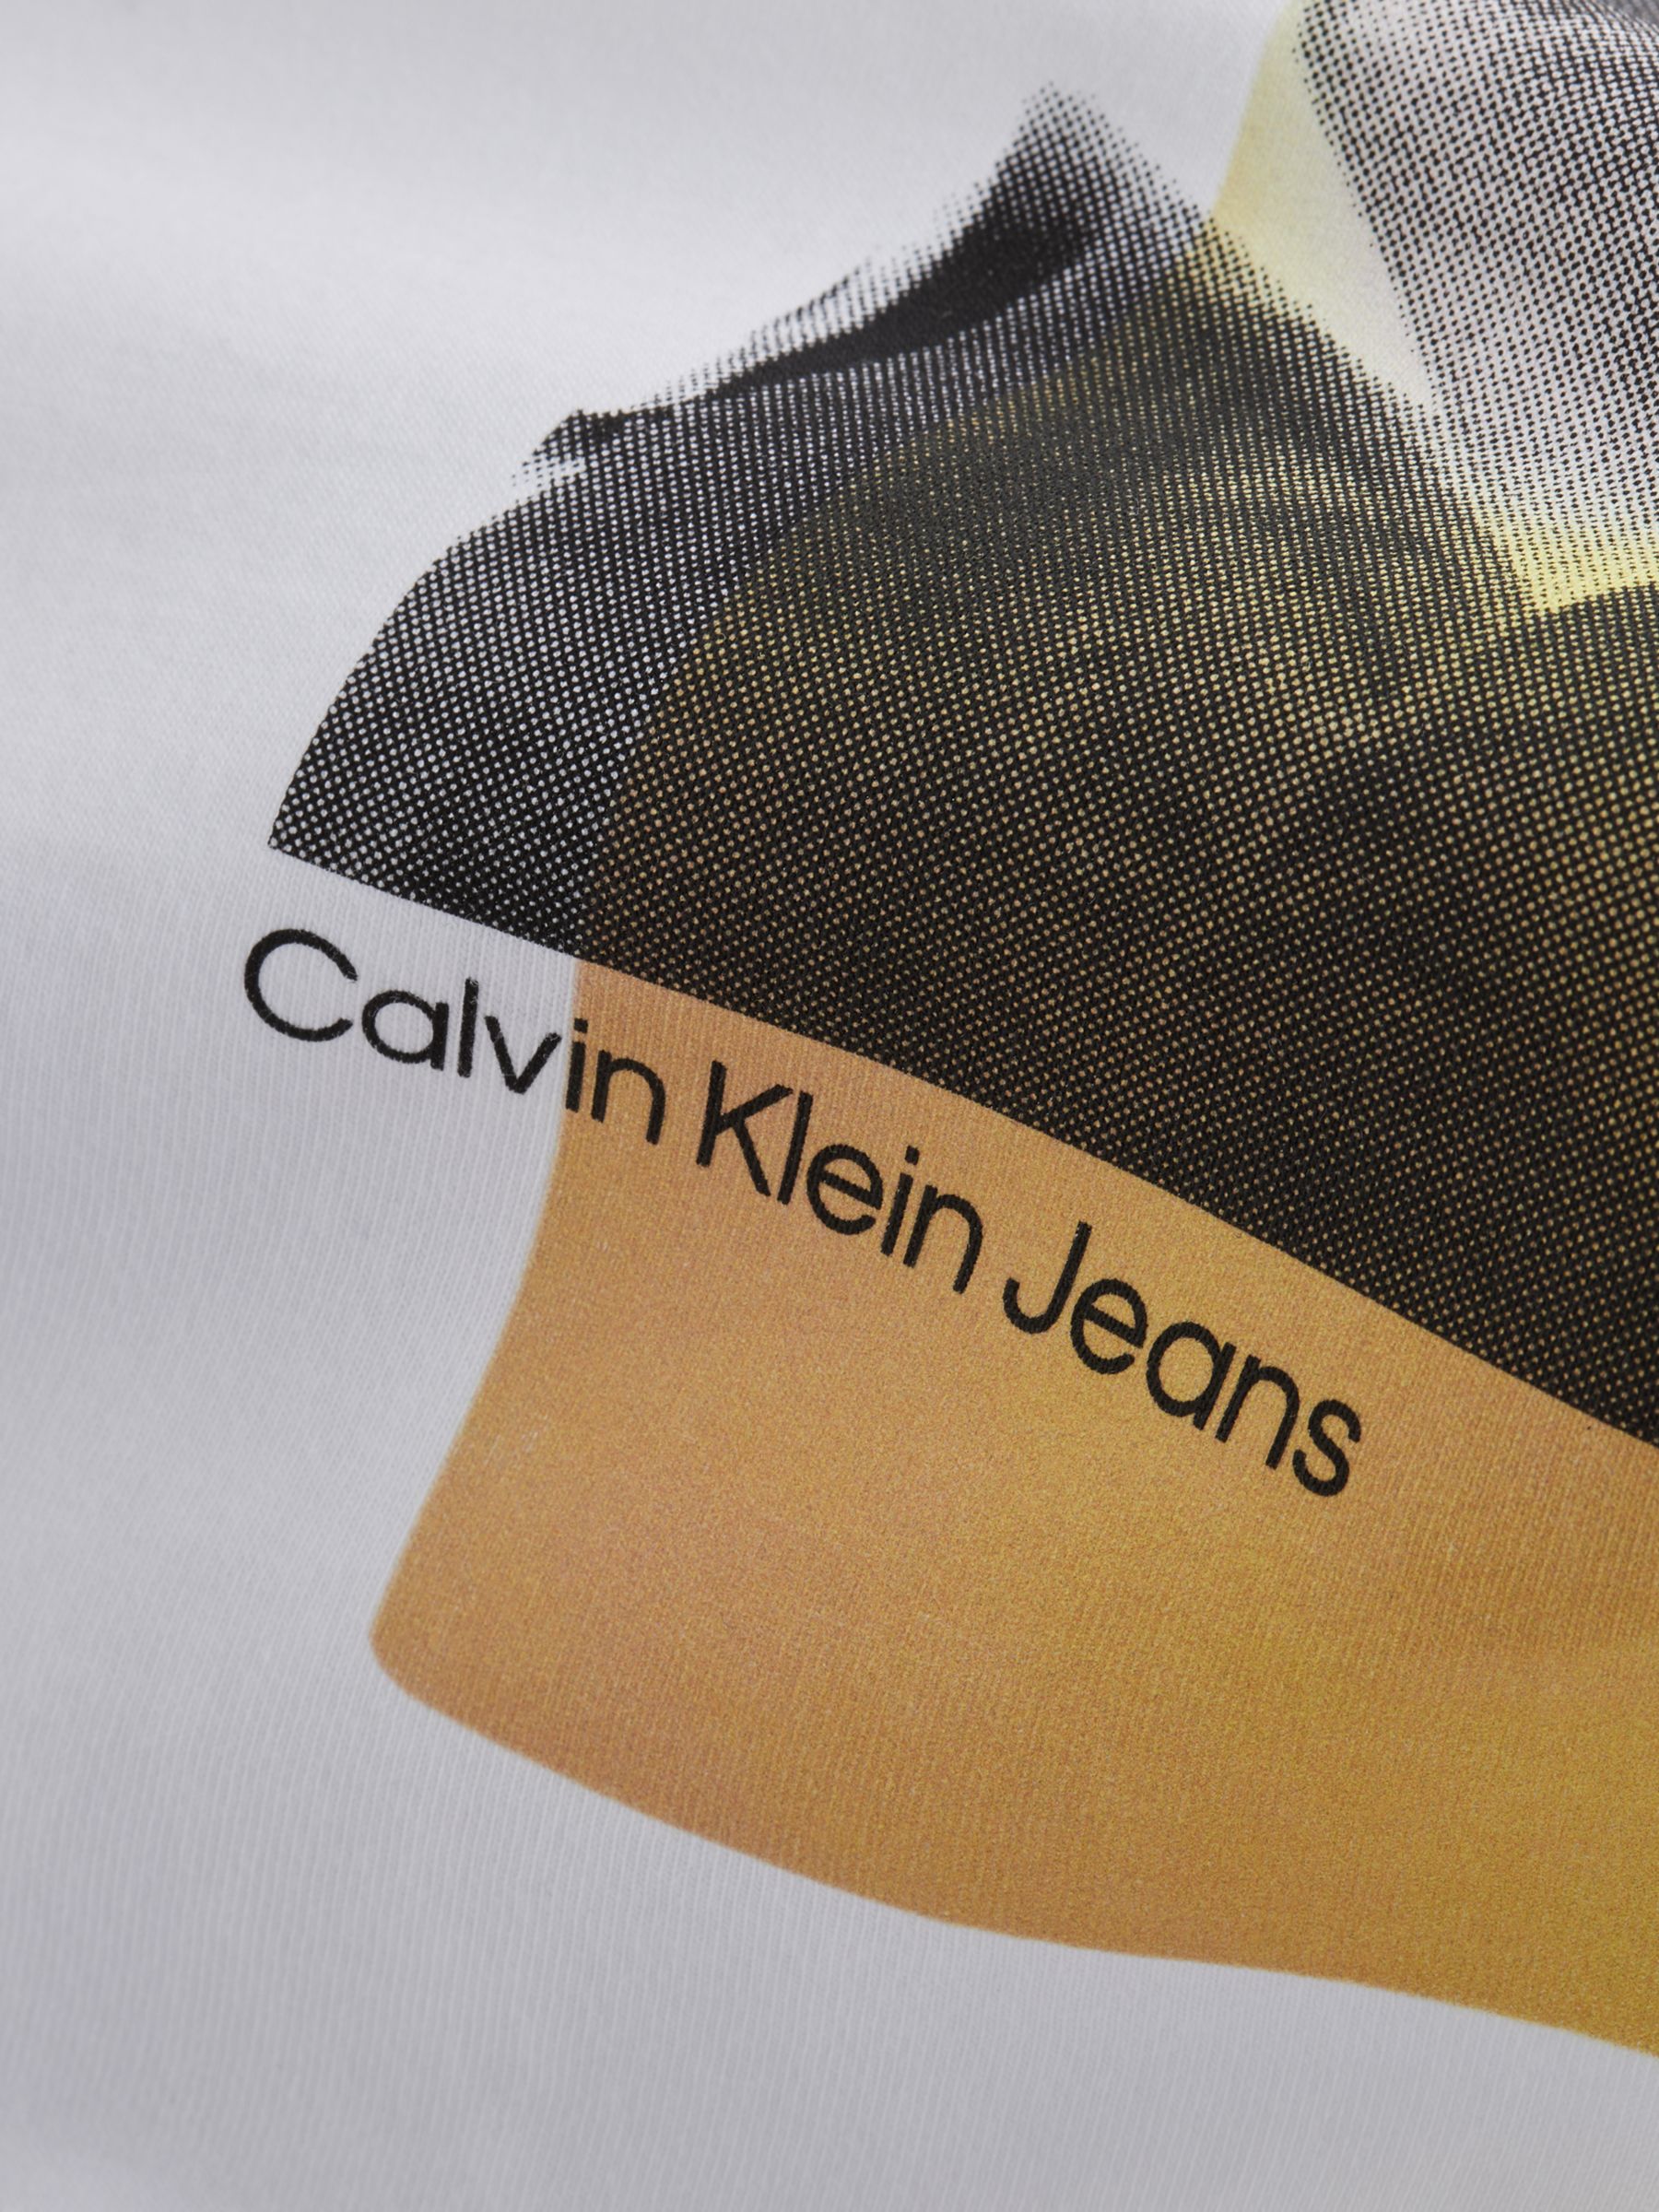 Calvin Klein Jeans NYC Print T-Shirt, Bright White, XS